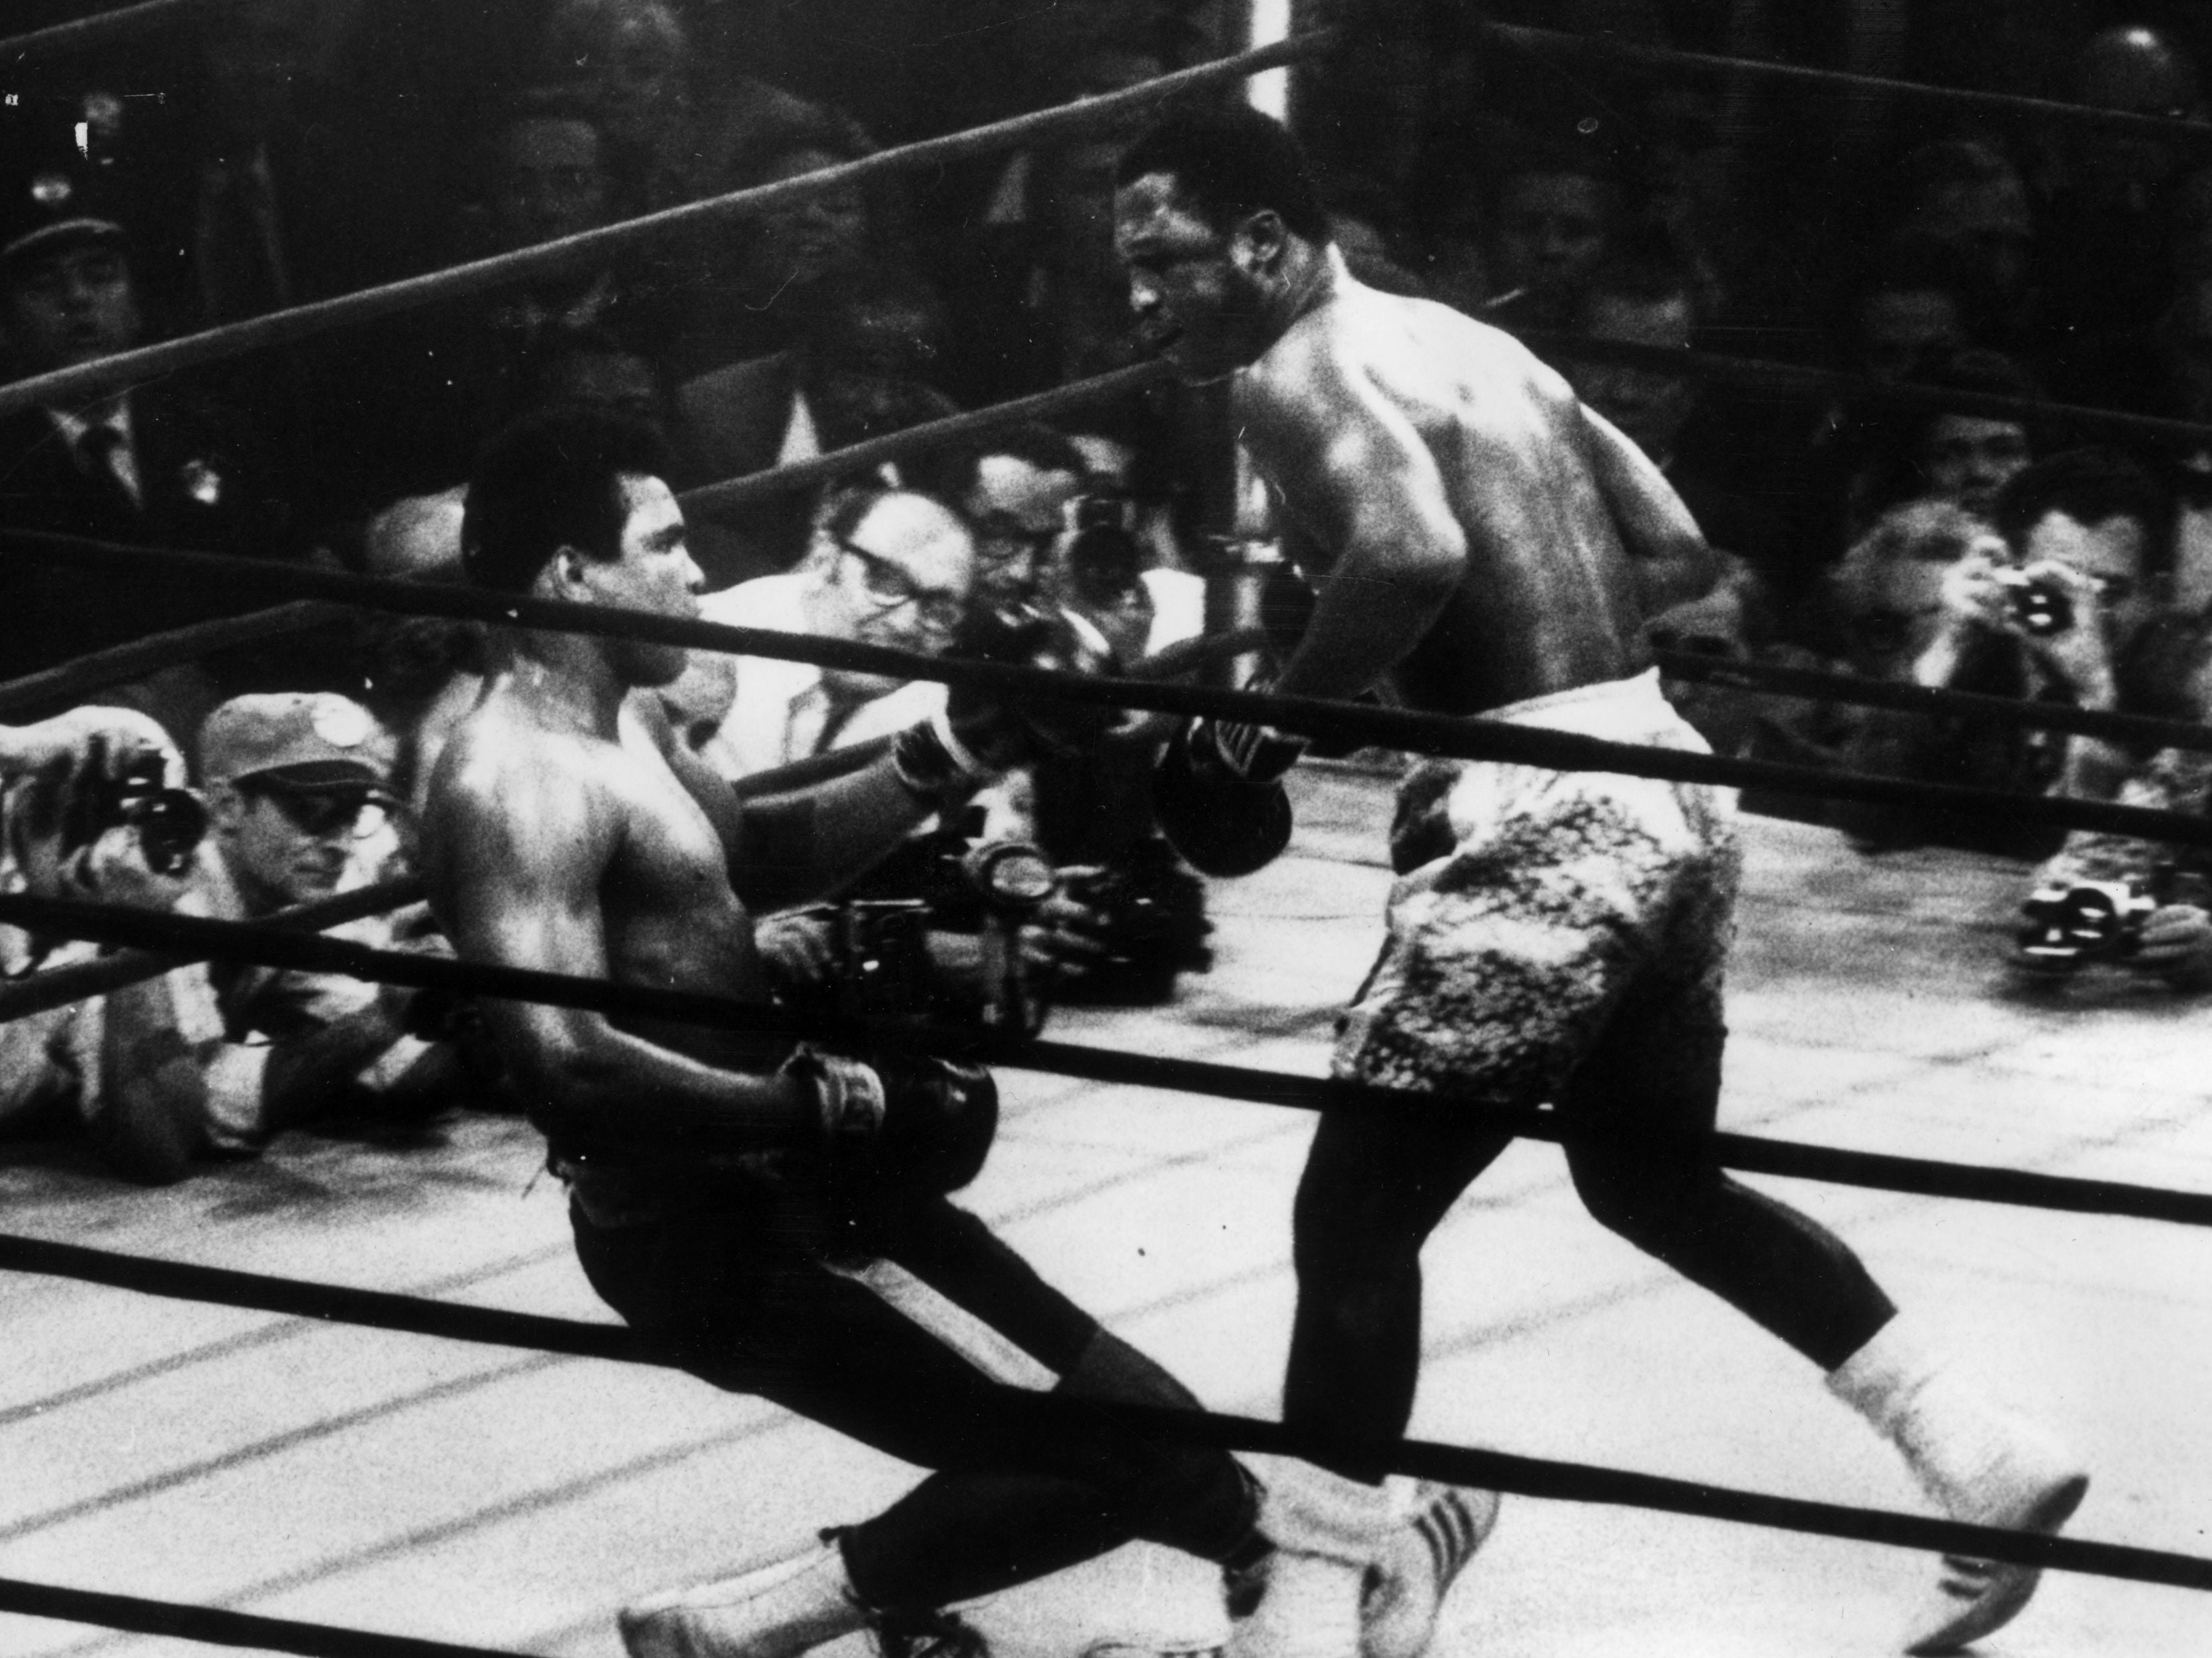 Joe Frazier knocks down Muhammad Ali in their meeting in March 1971